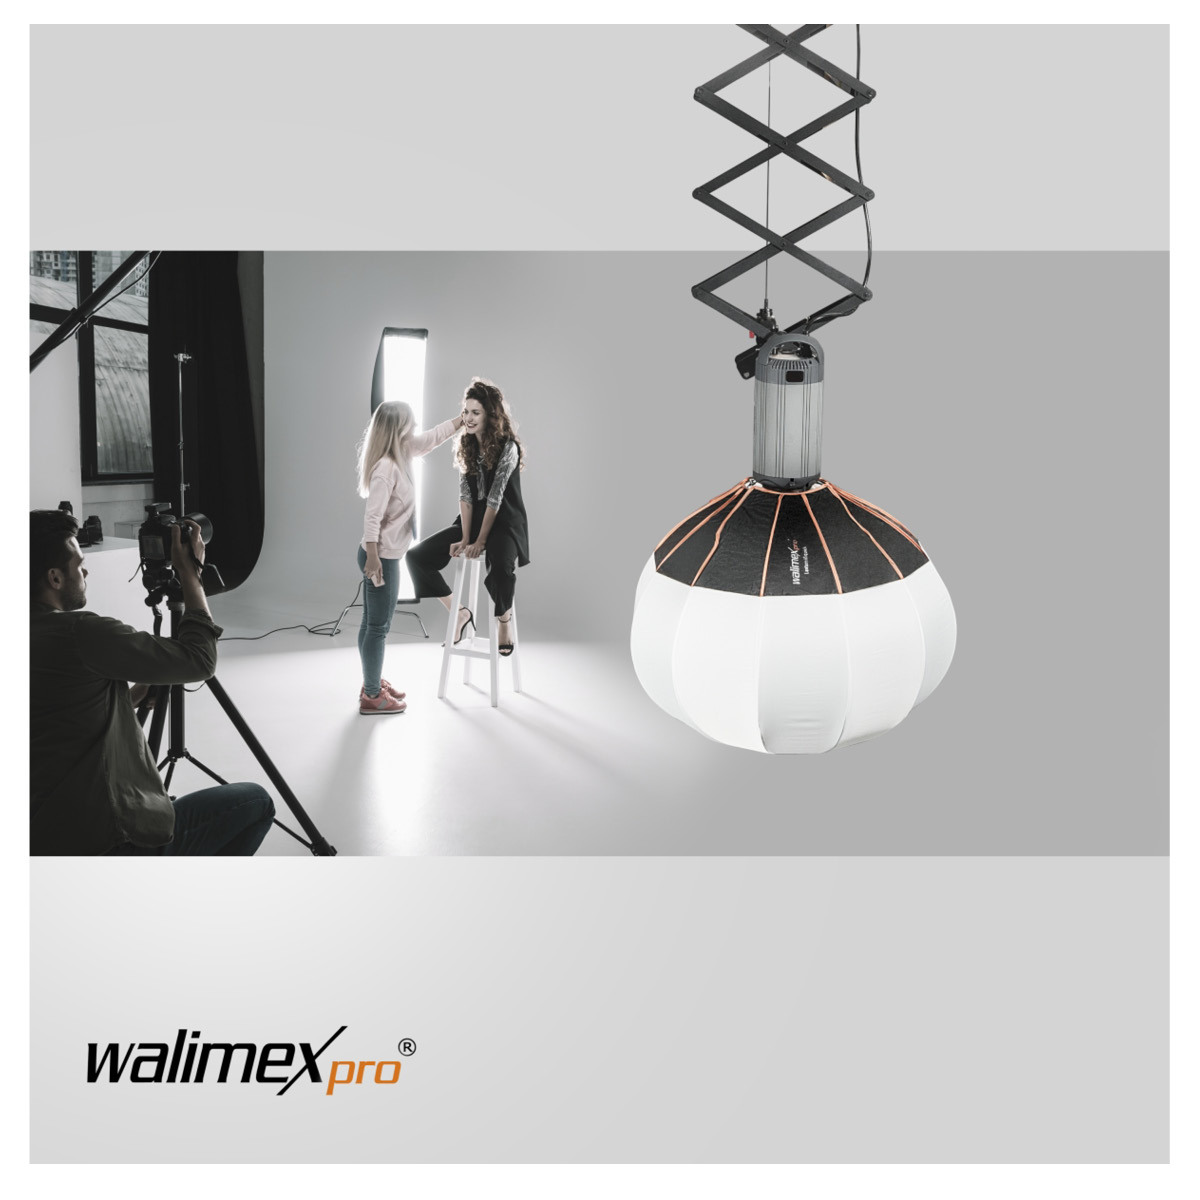 Walimex pro 360° Ambient Light Softbox 80 Multiblitz V